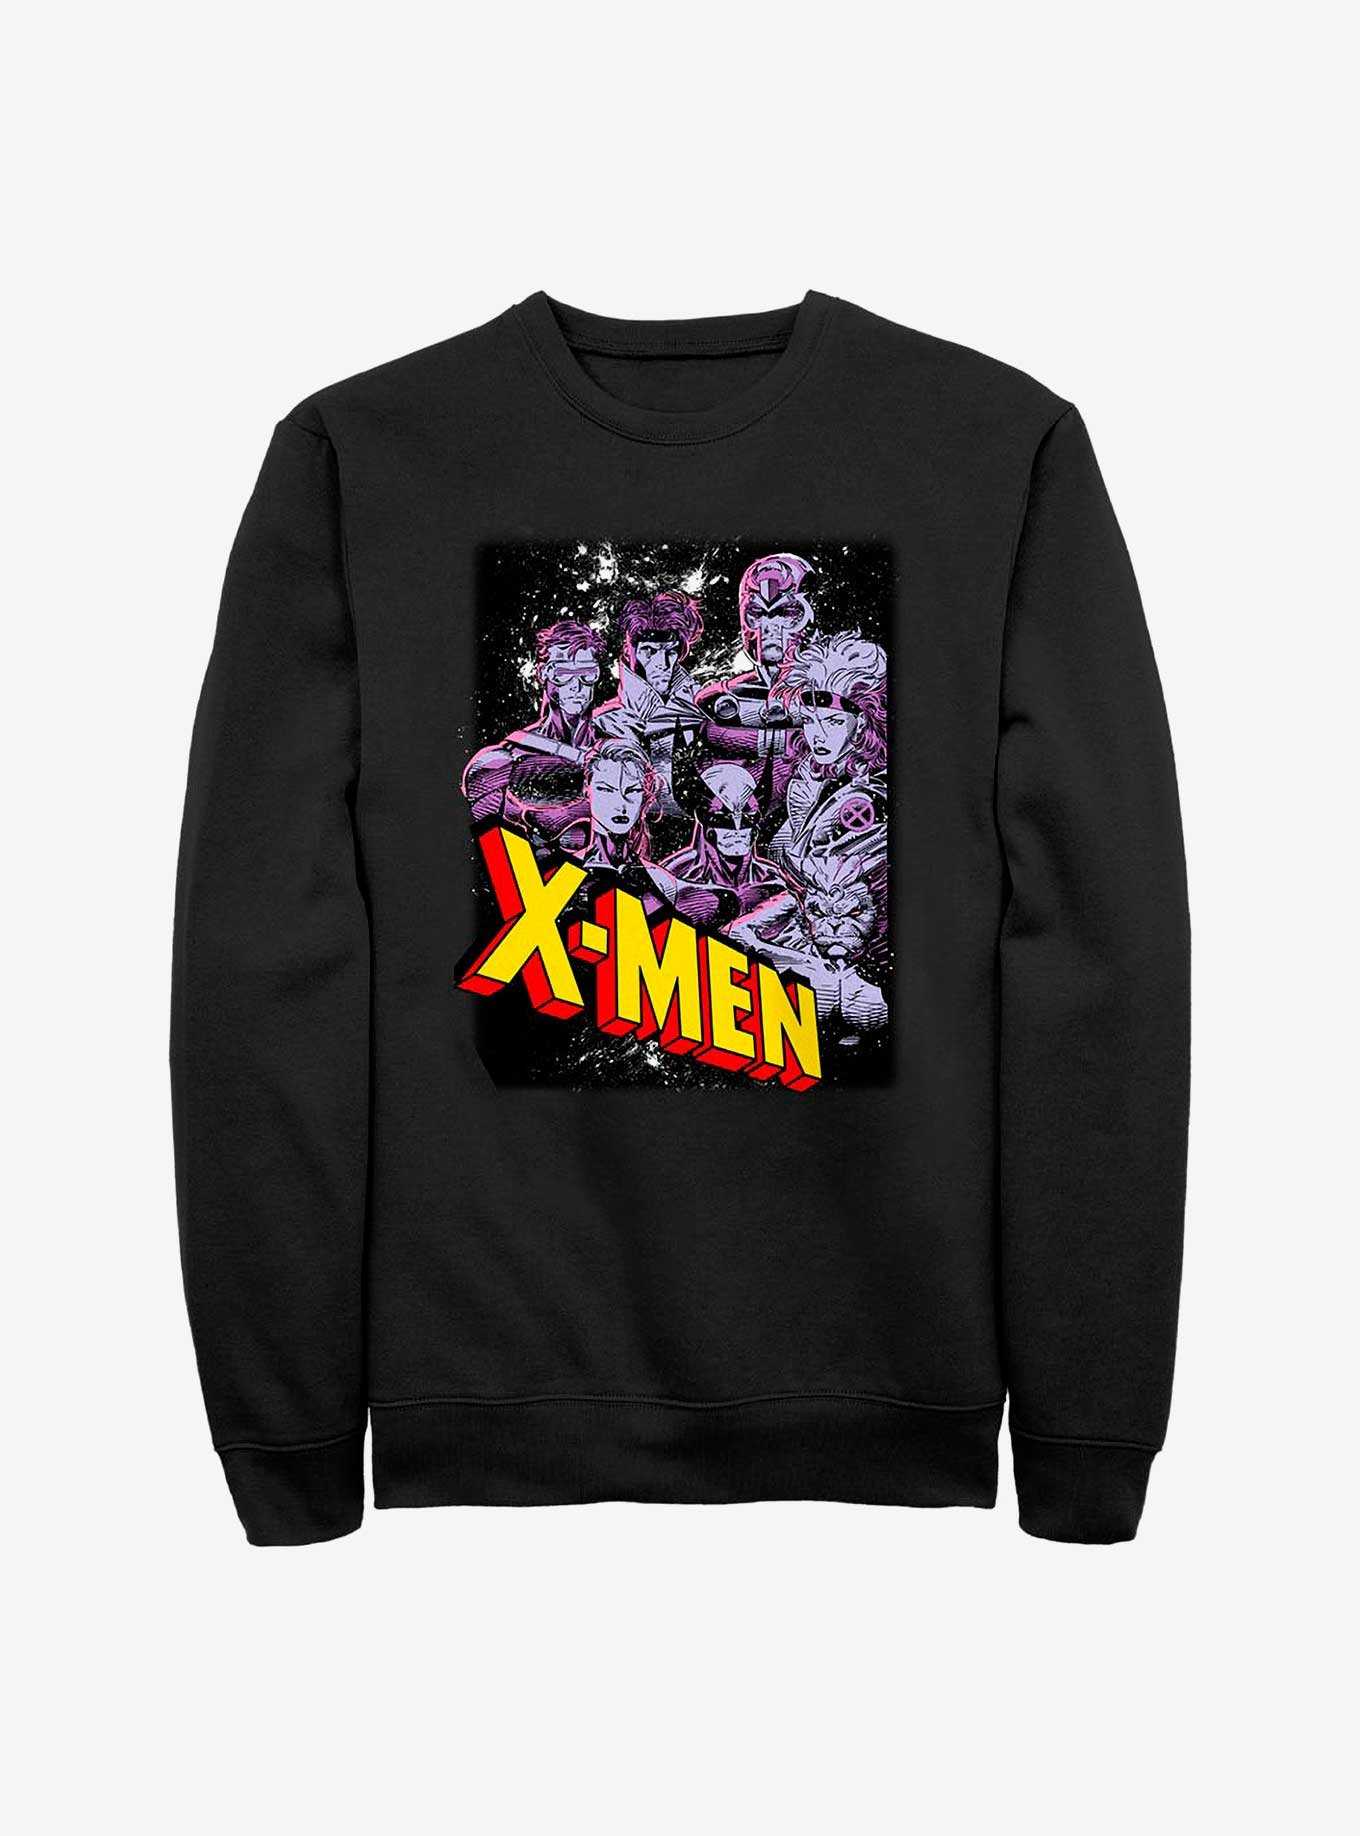 Marvel X-Men Vintage Team Sweatshirt, , hi-res